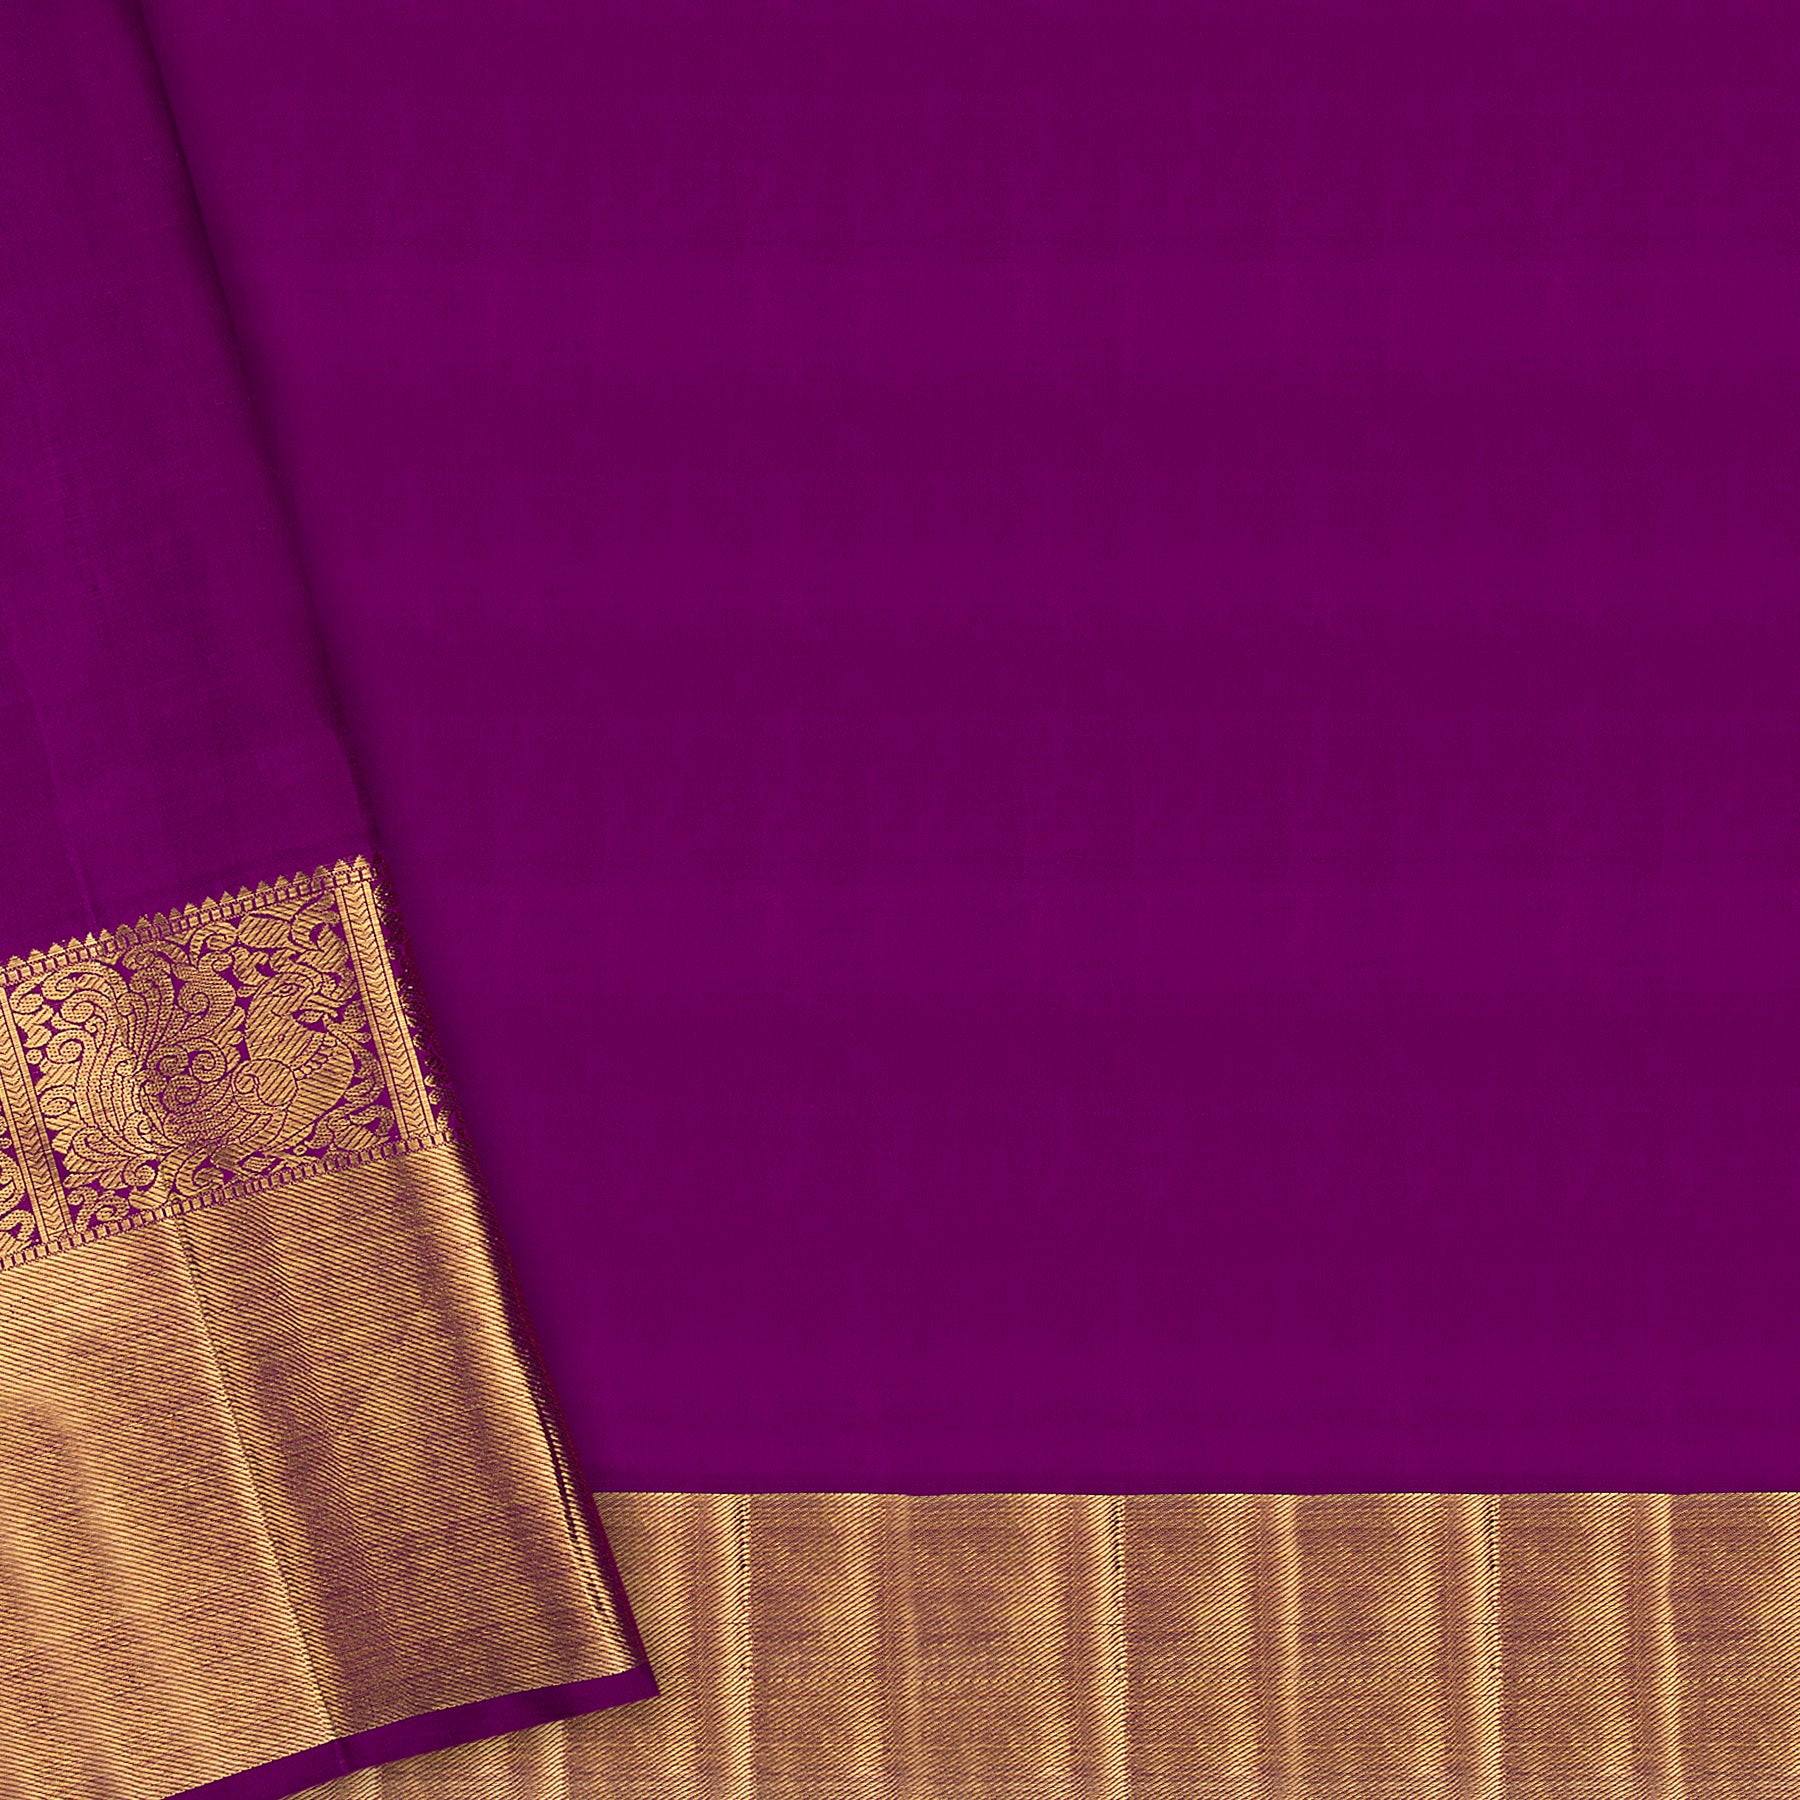 Kanakavalli Kanjivaram Silk Sari 22-110-HS001-14733 - Blouse View